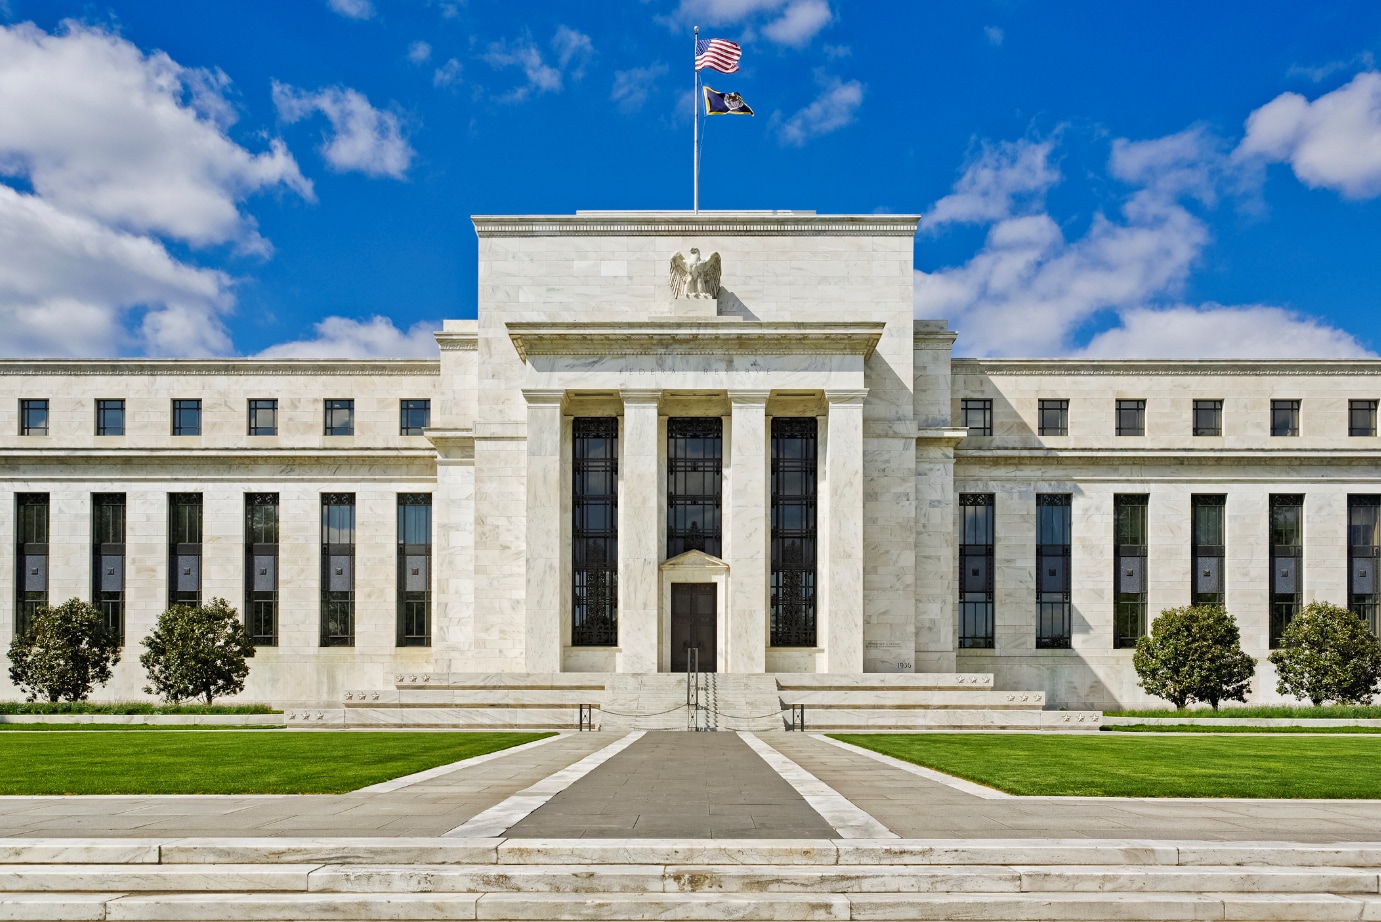 Federal Reserve Bank